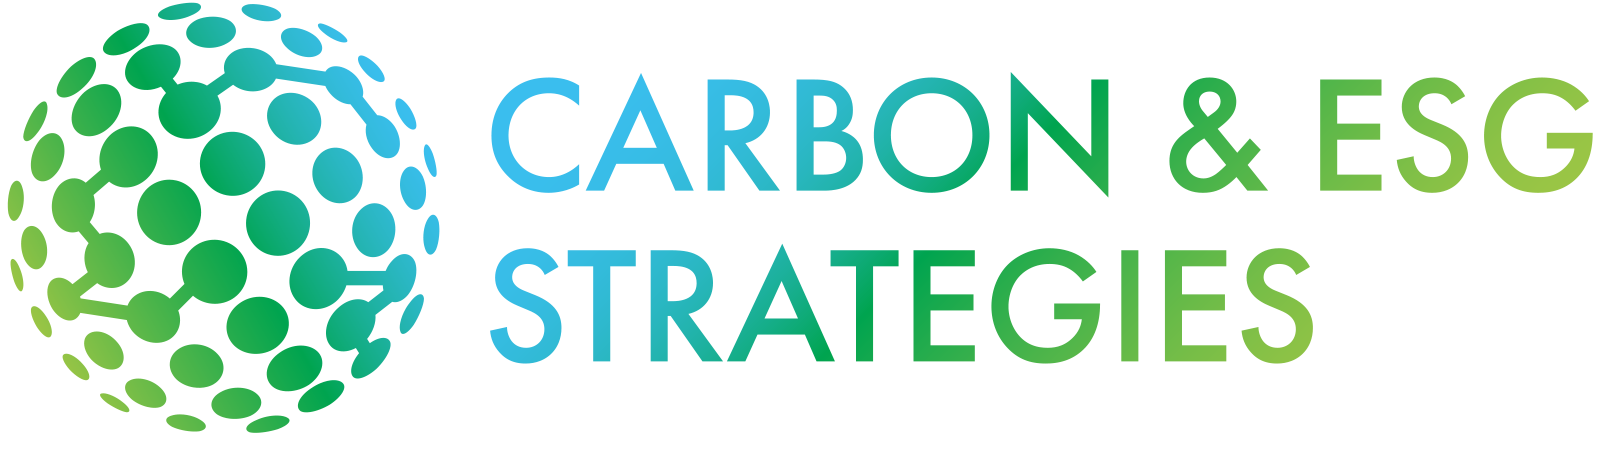 Carbon & ESG Strategies Conference logo